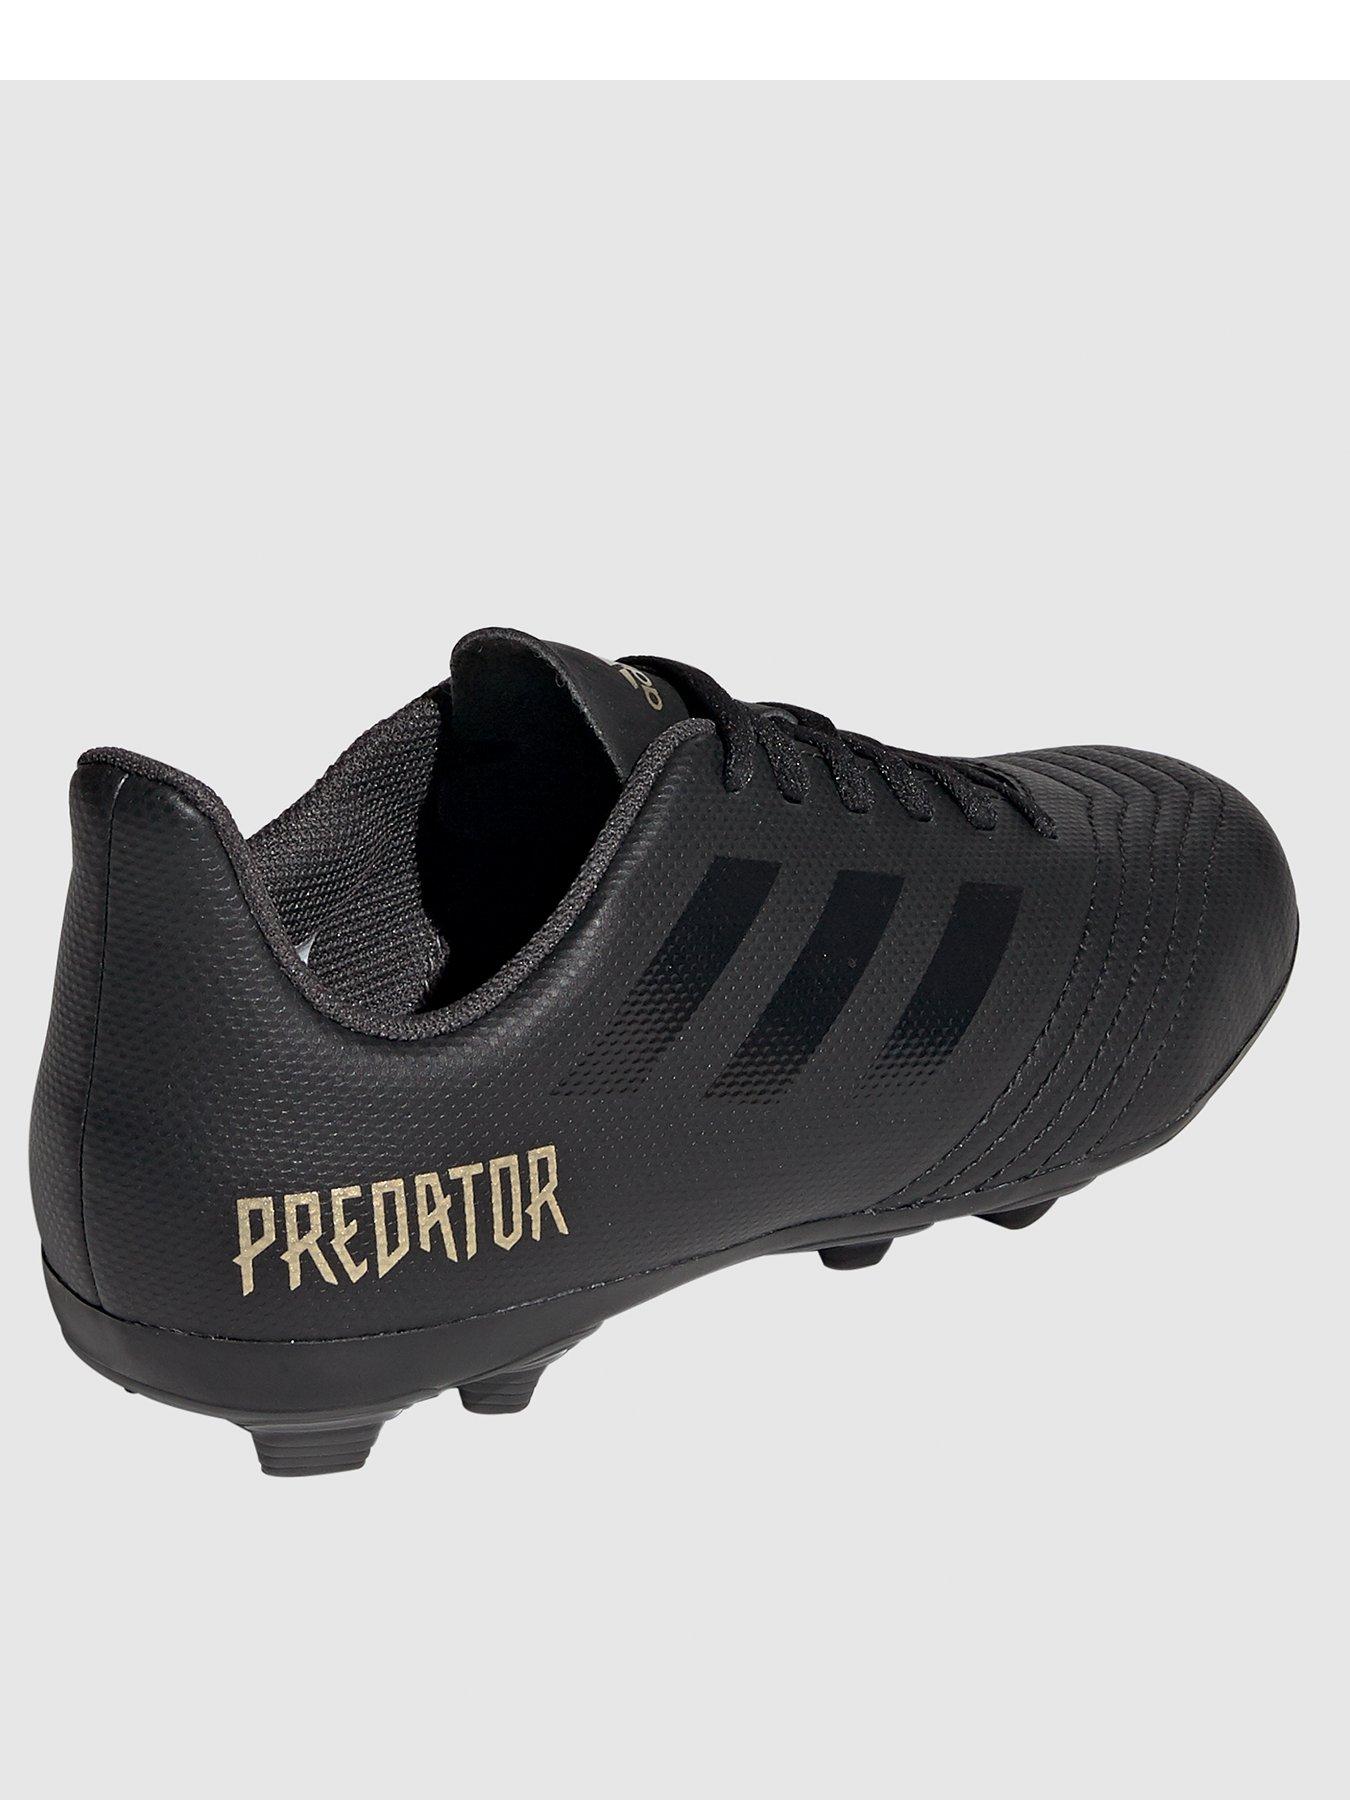 predator boots black